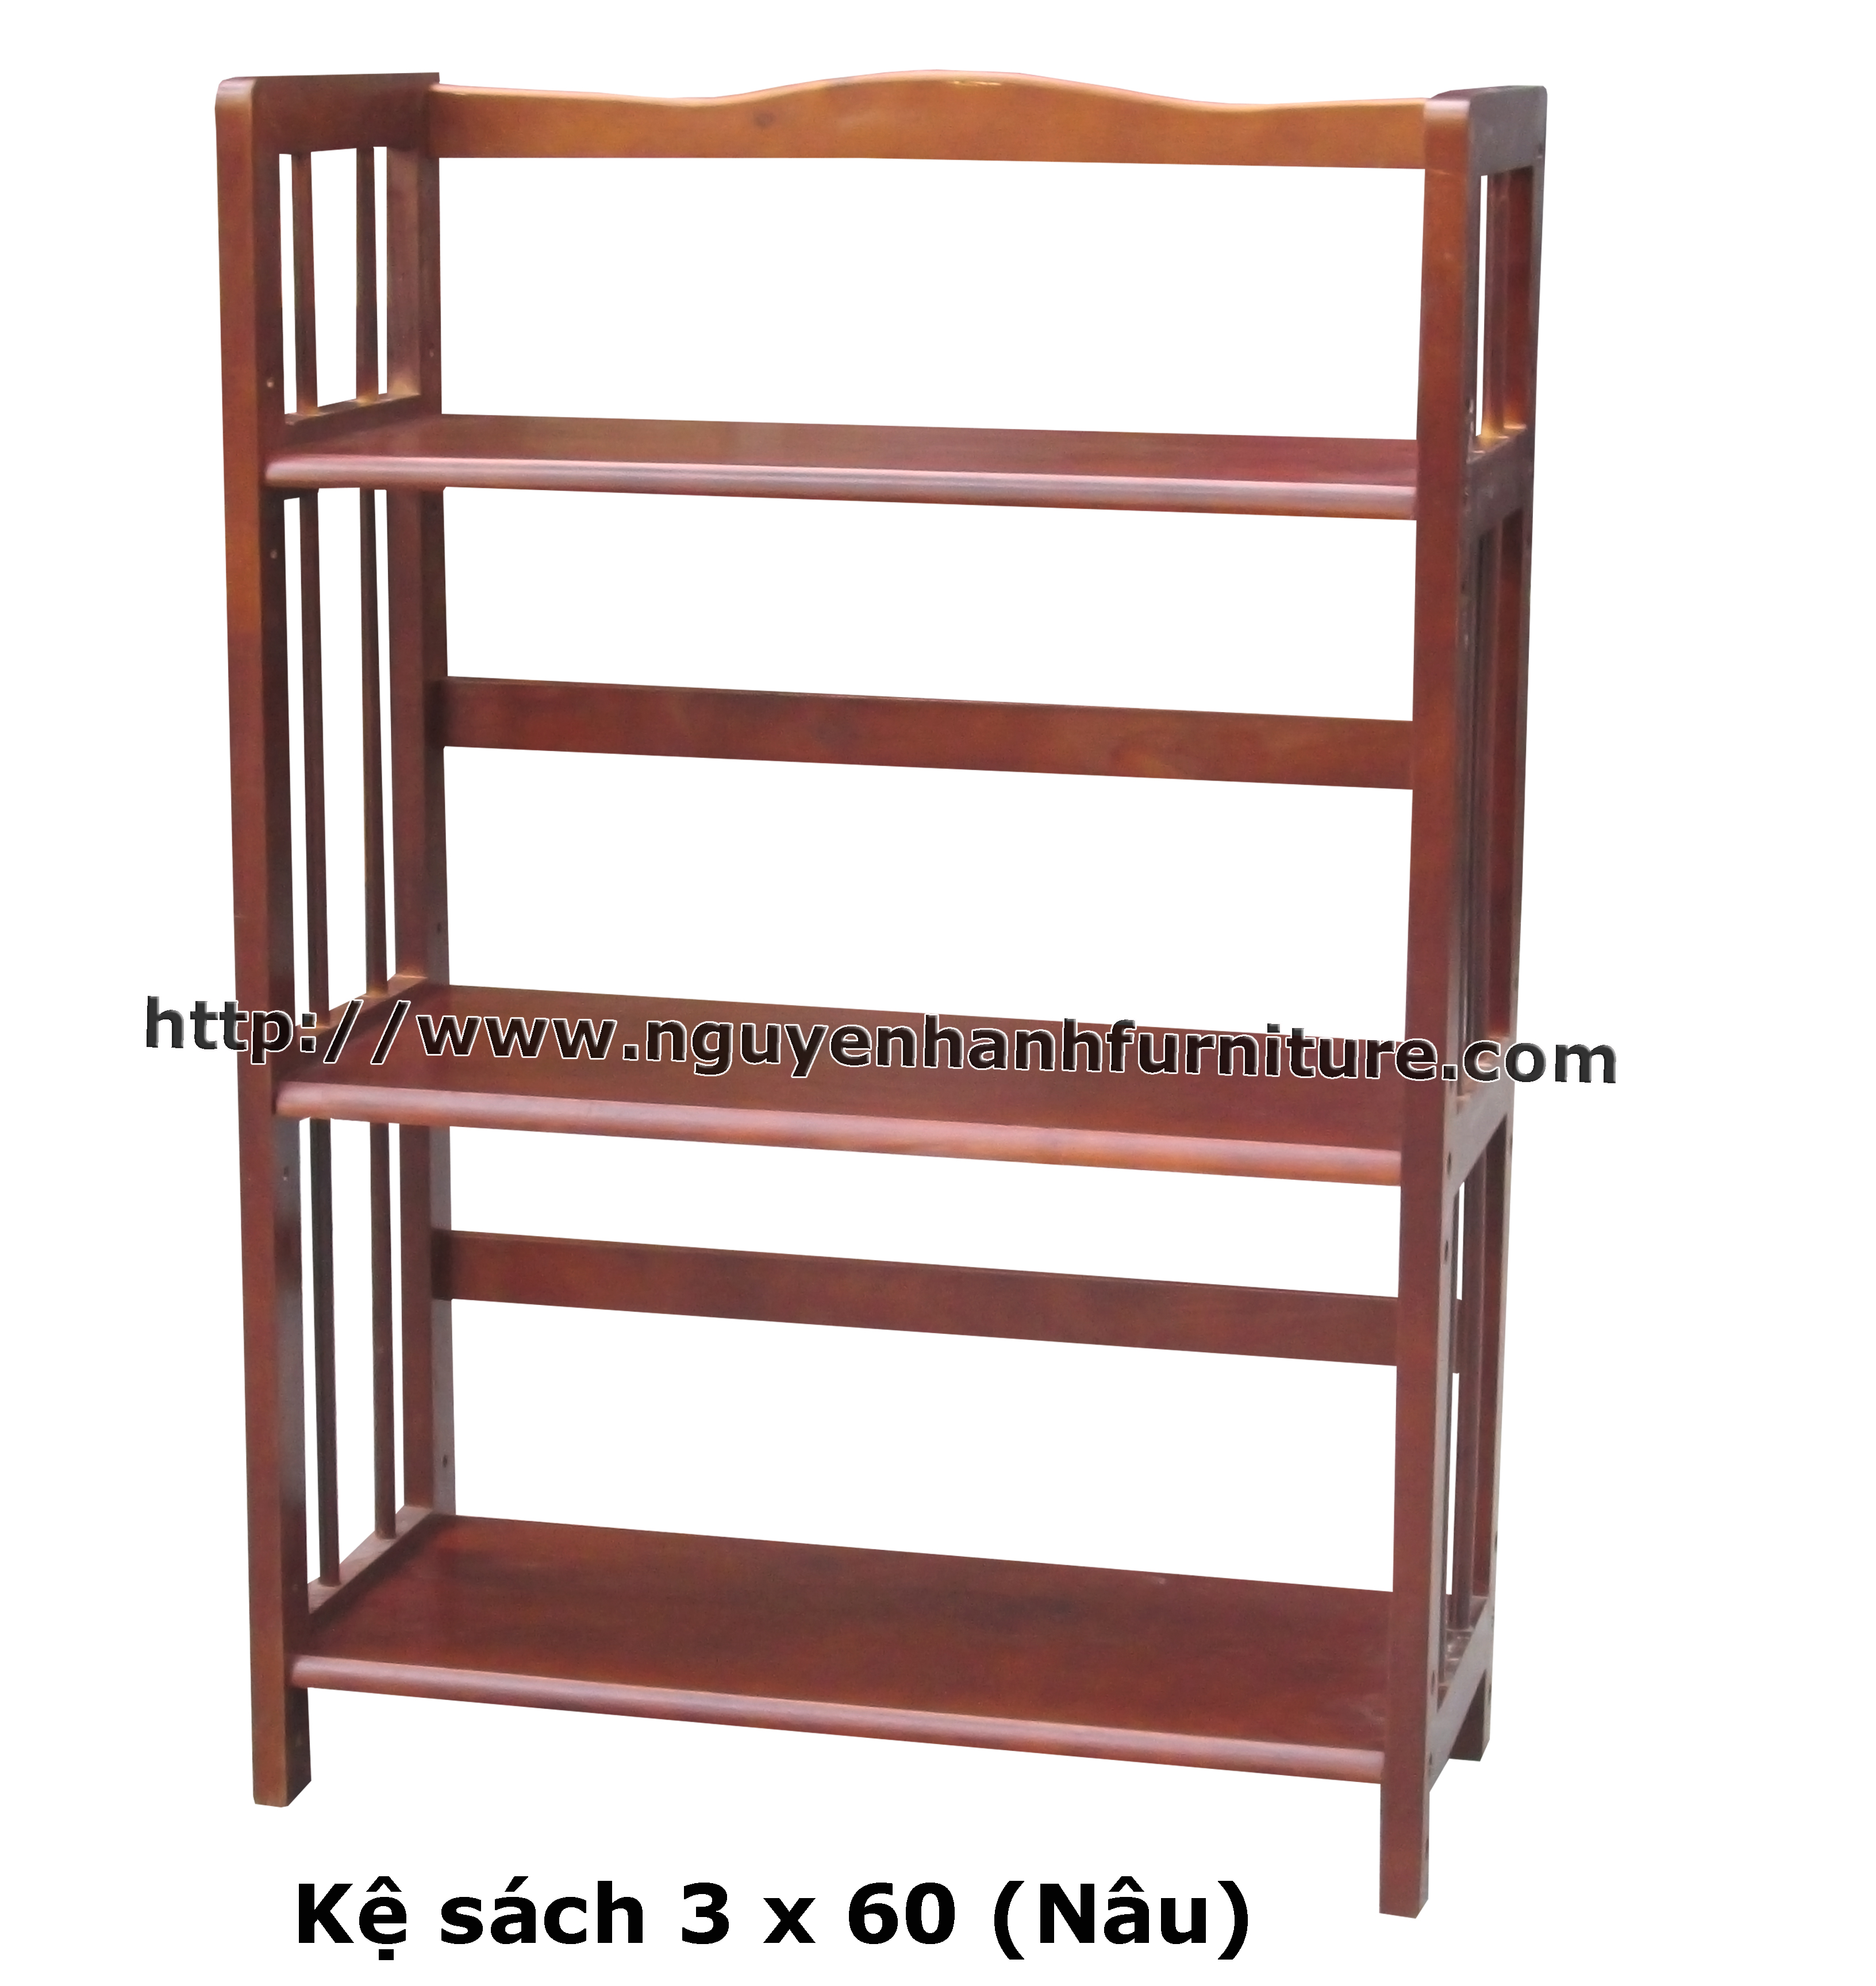 Name product: Triple storey Adjustable Bookshelf 60 (Brown) - Dimensions: 63 x 28 x 90 (H) - Description: Wood natural rubber